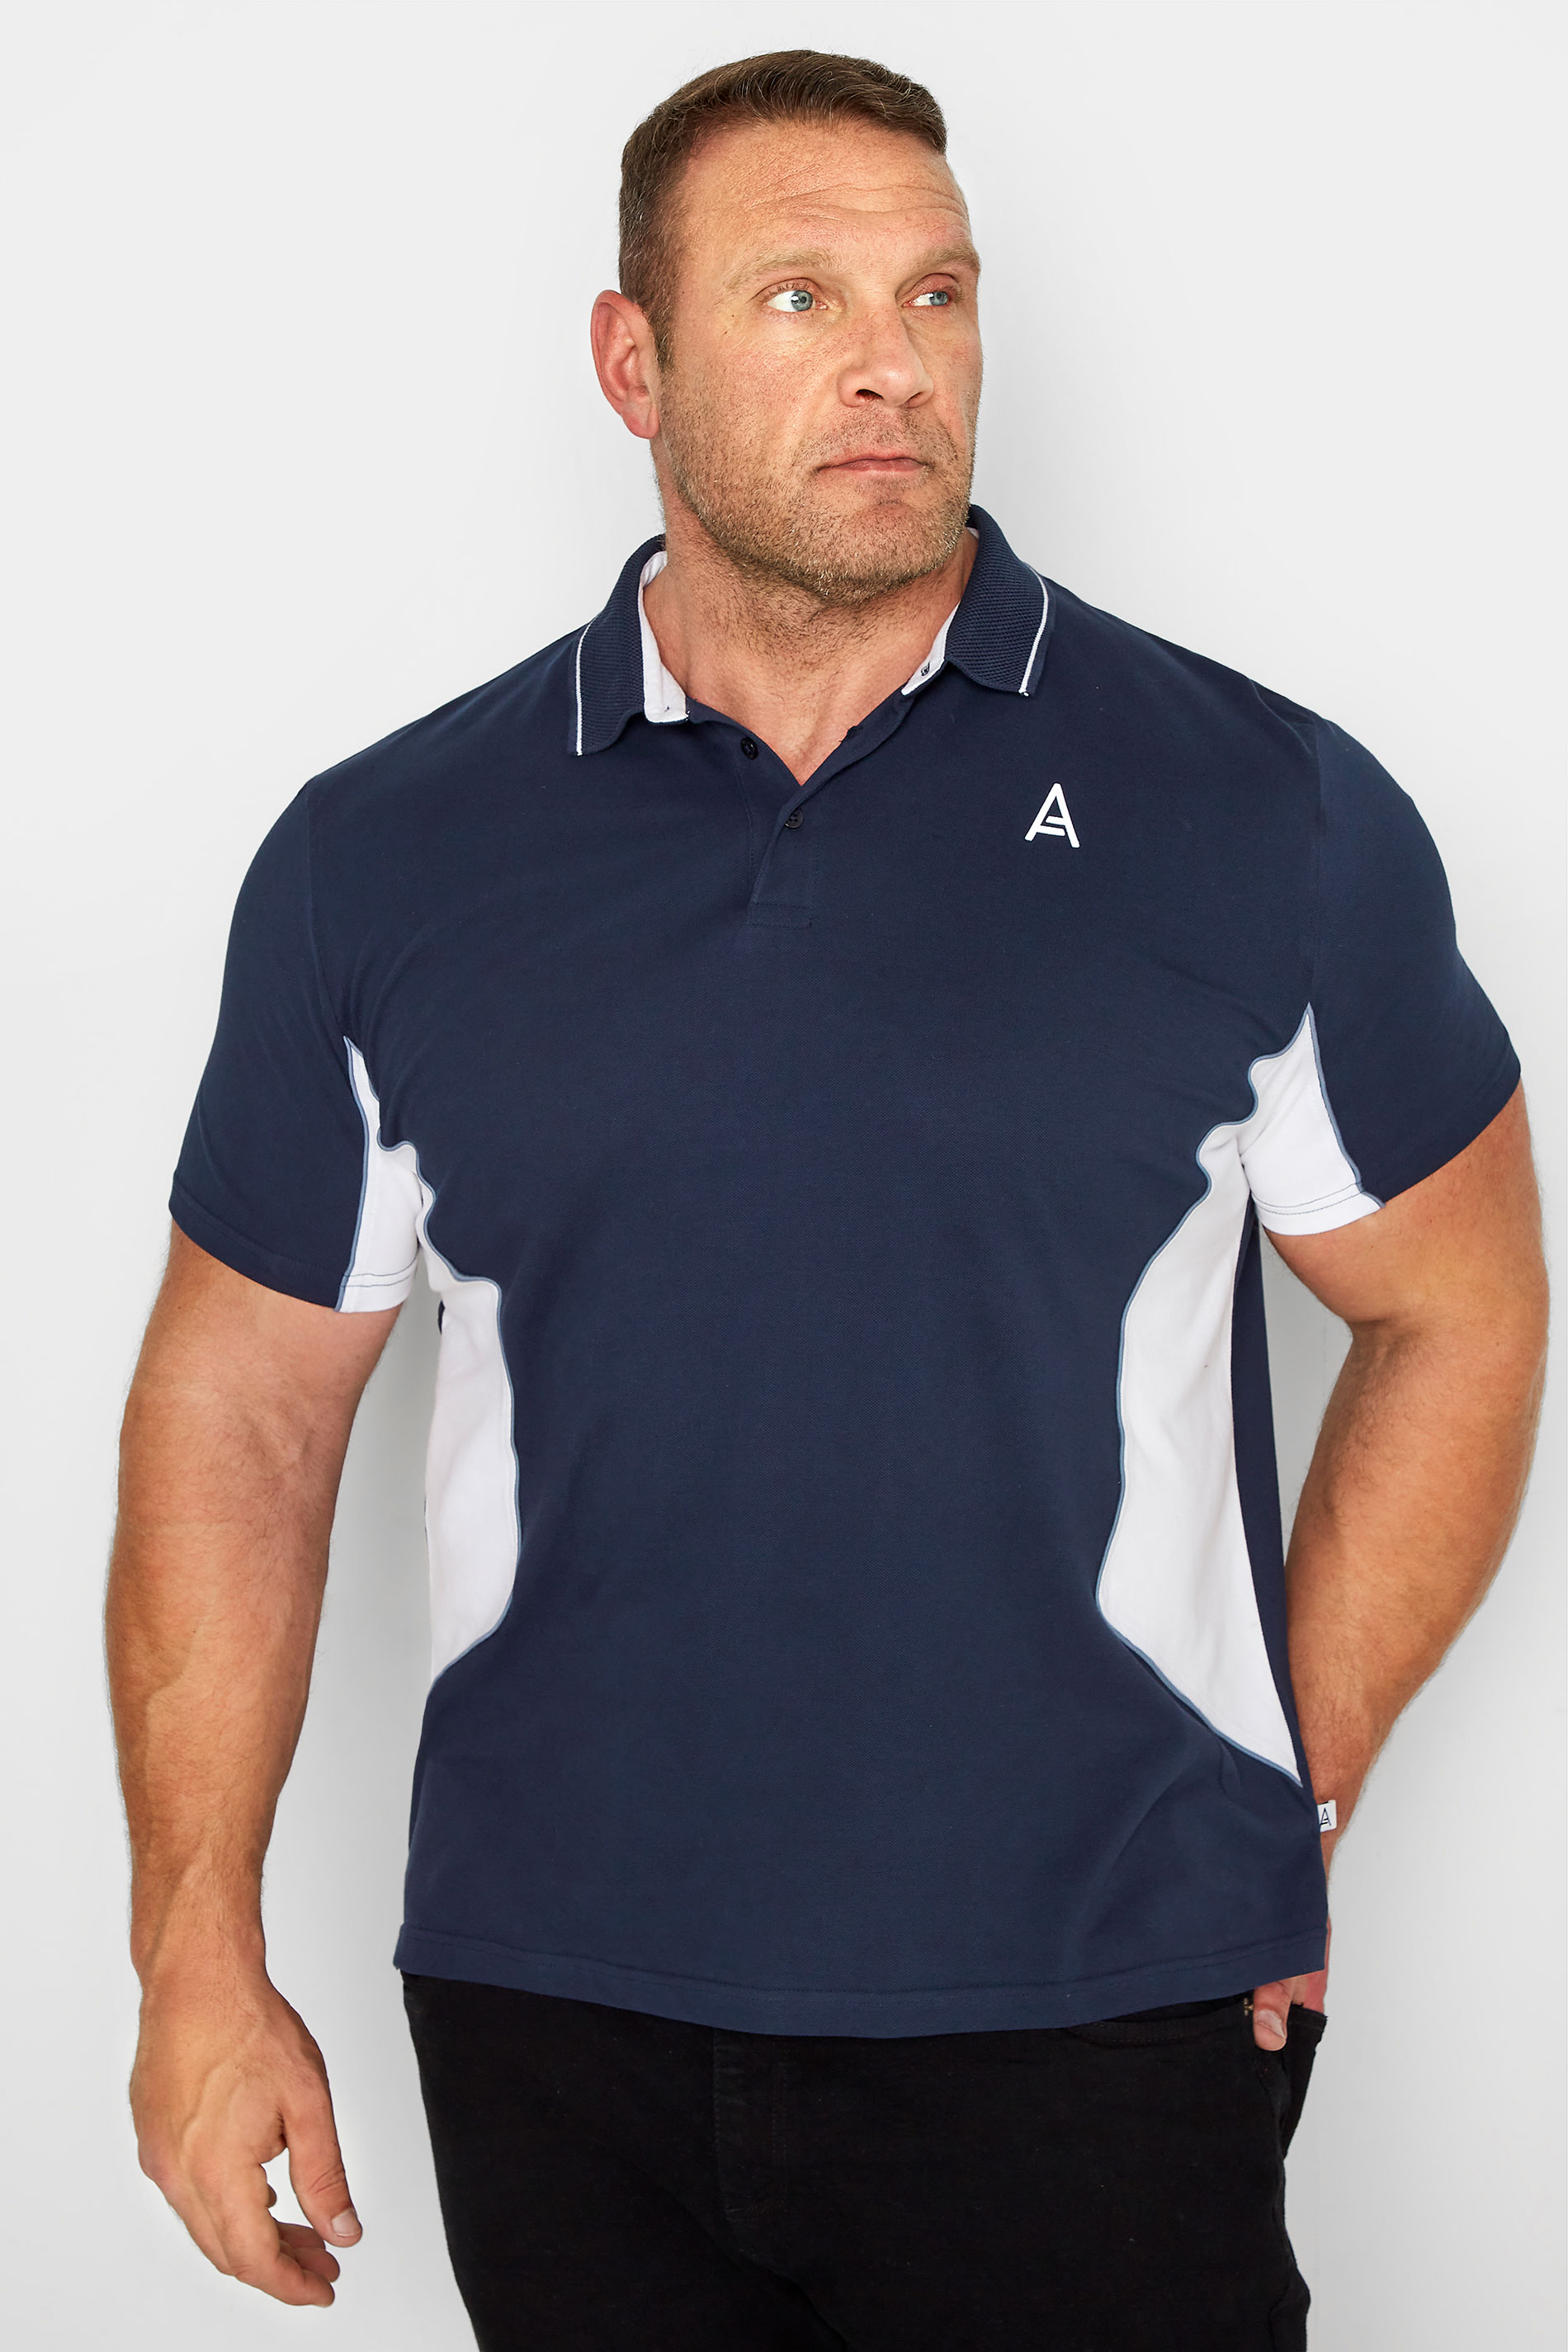 STUDIO A Navy Cut & Sew Polo Shirt_A.jpg